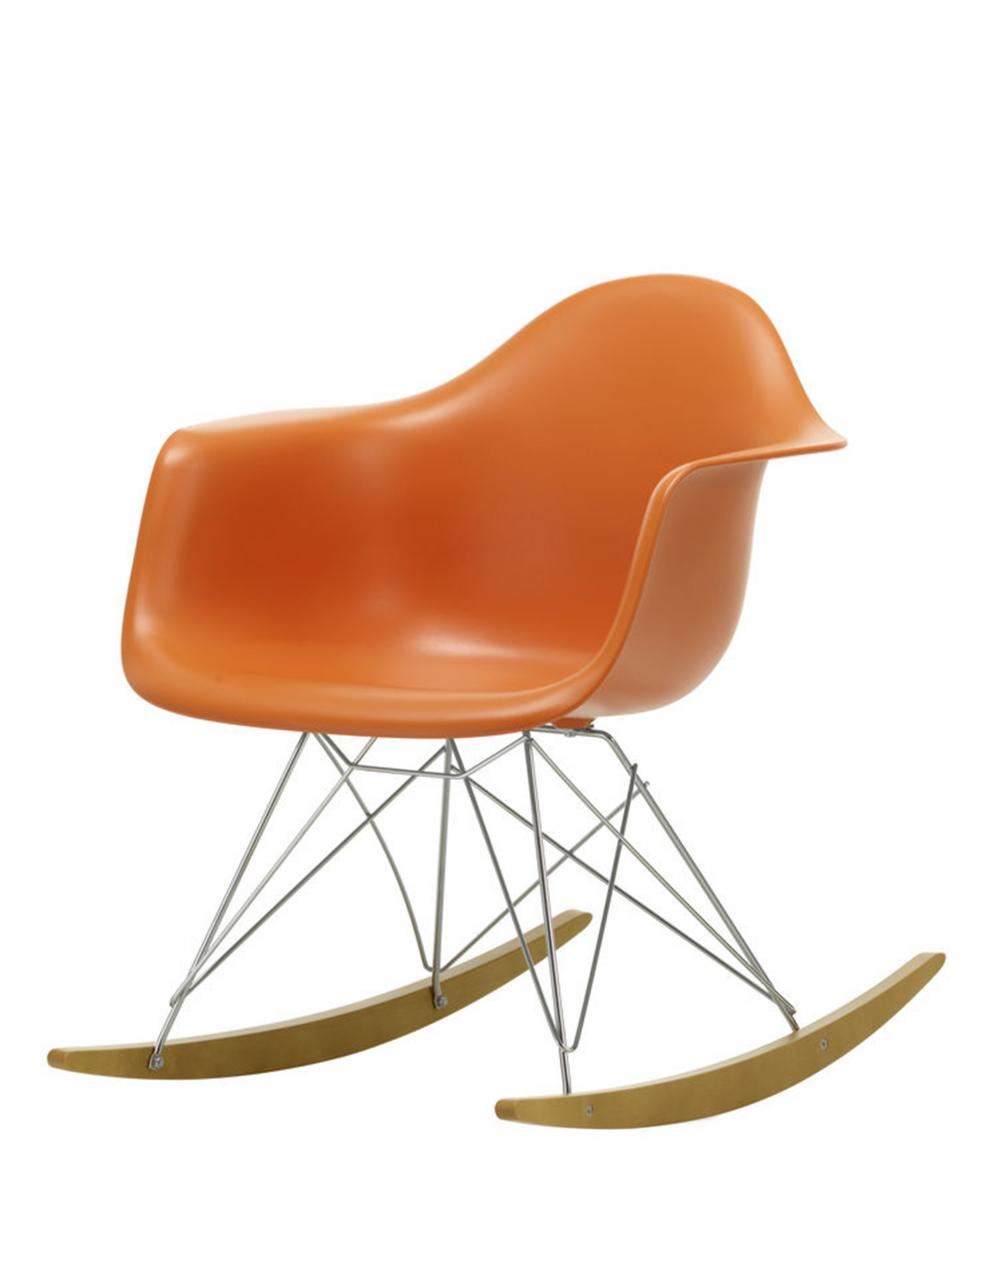 Eames Rar Plastic Rocking Chair Chrome Base Rusty Orange Golden Maple